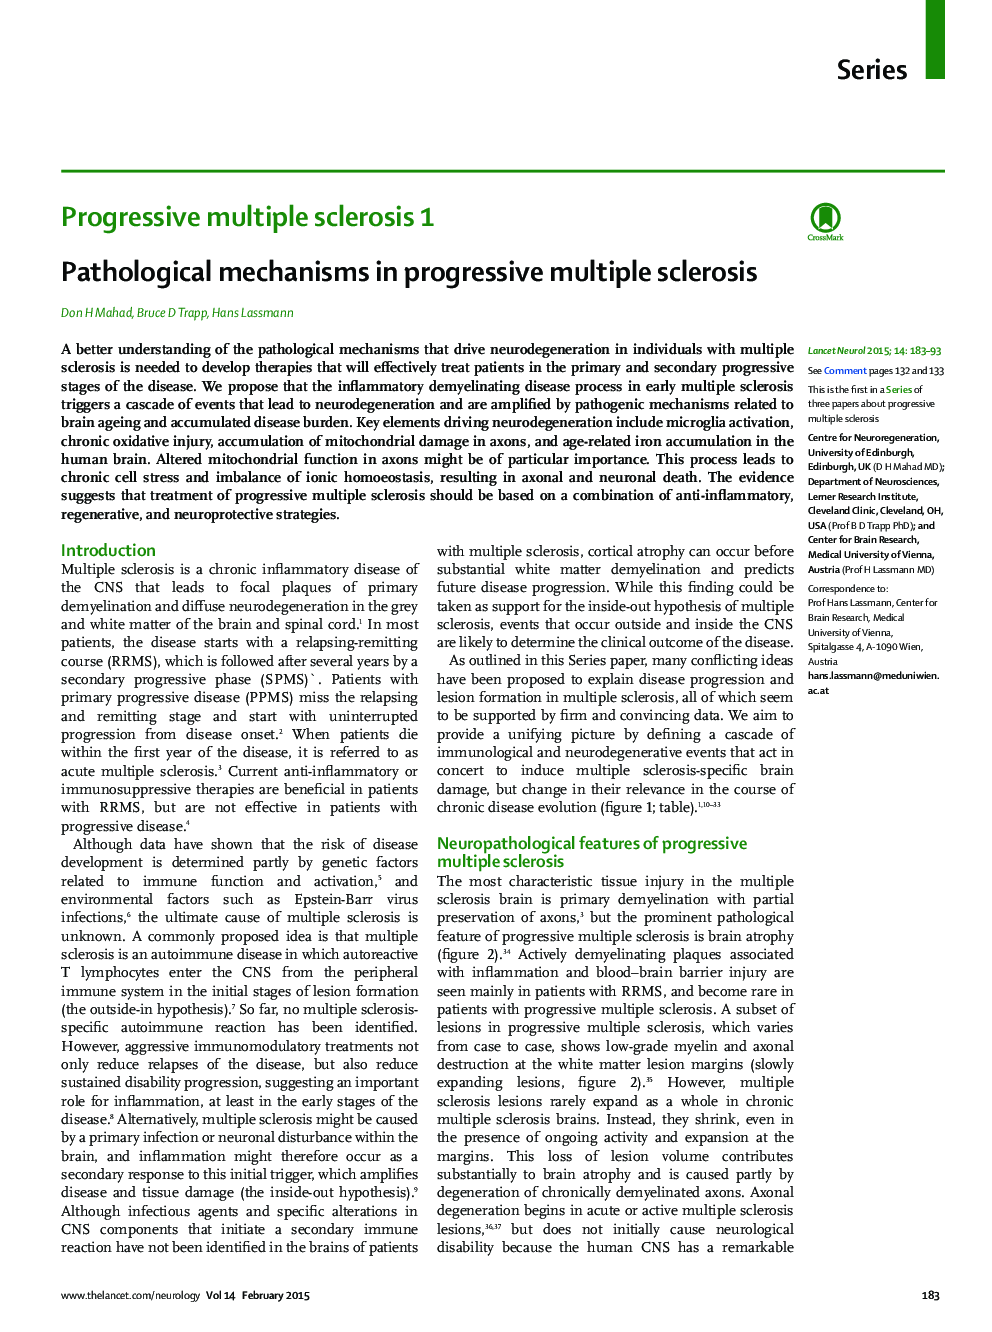 Pathological mechanisms in progressive multiple sclerosis